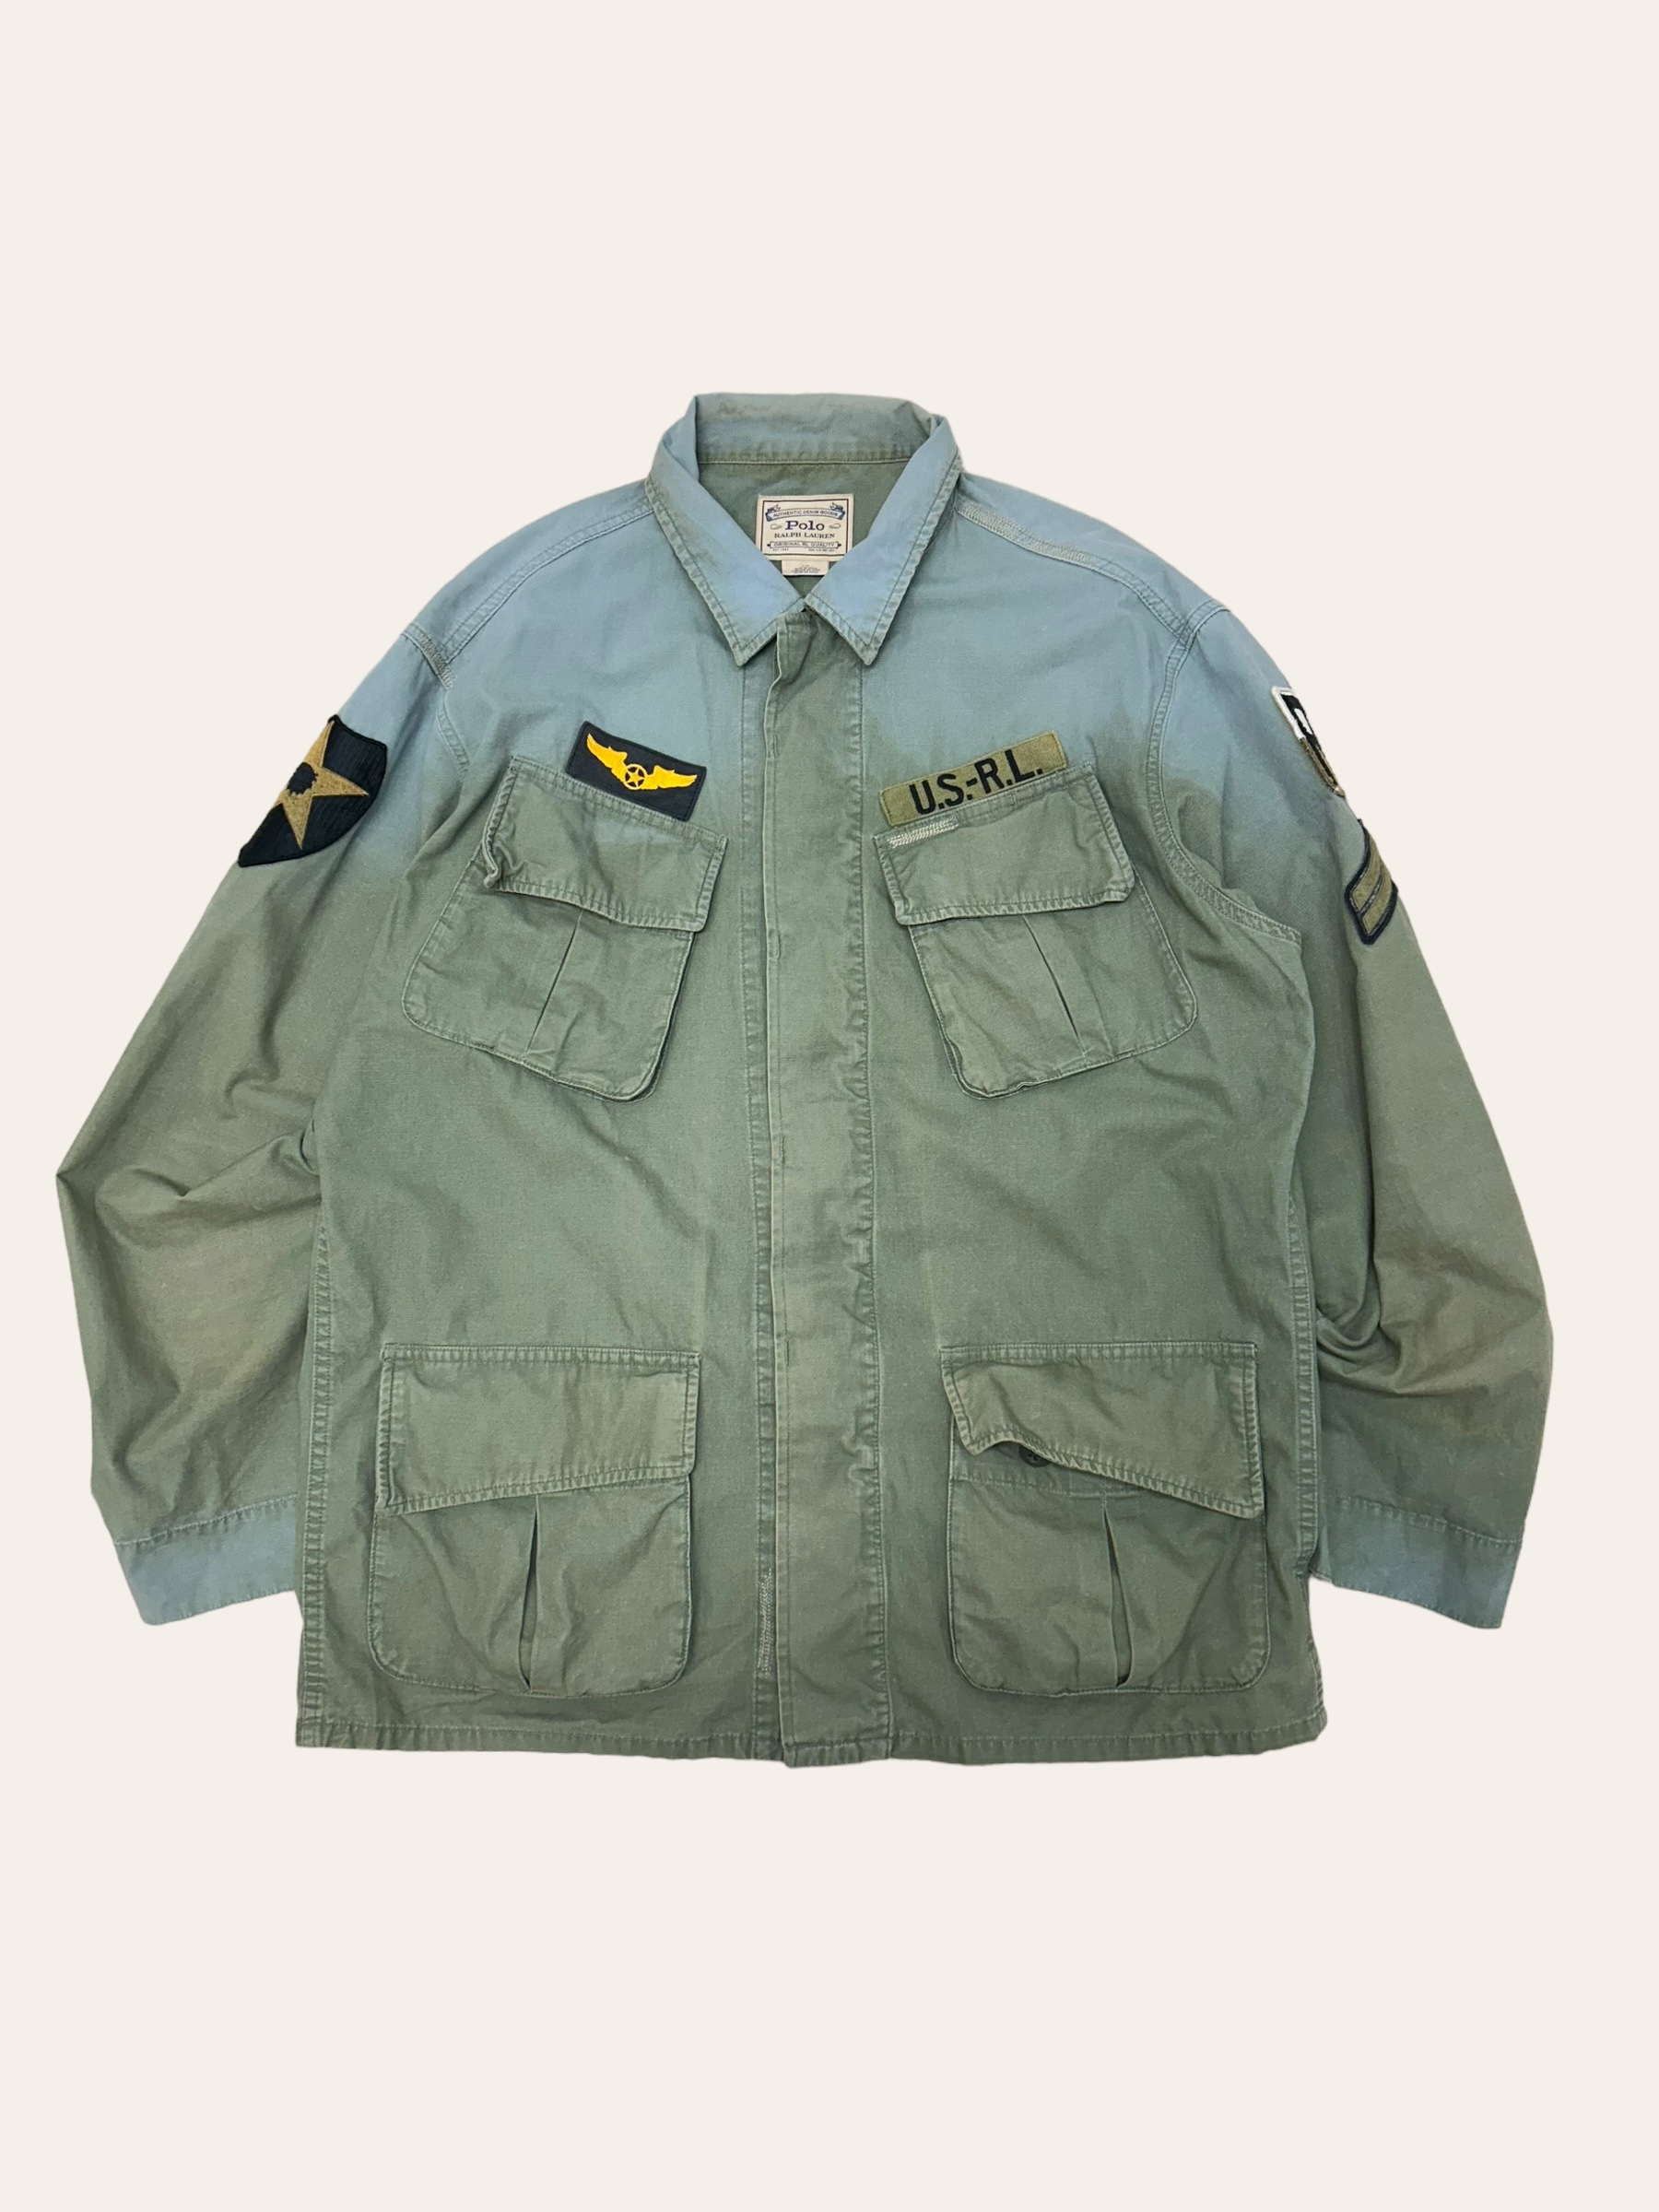 Polo ralph lauren khaki fatigue military overshirt jacket L